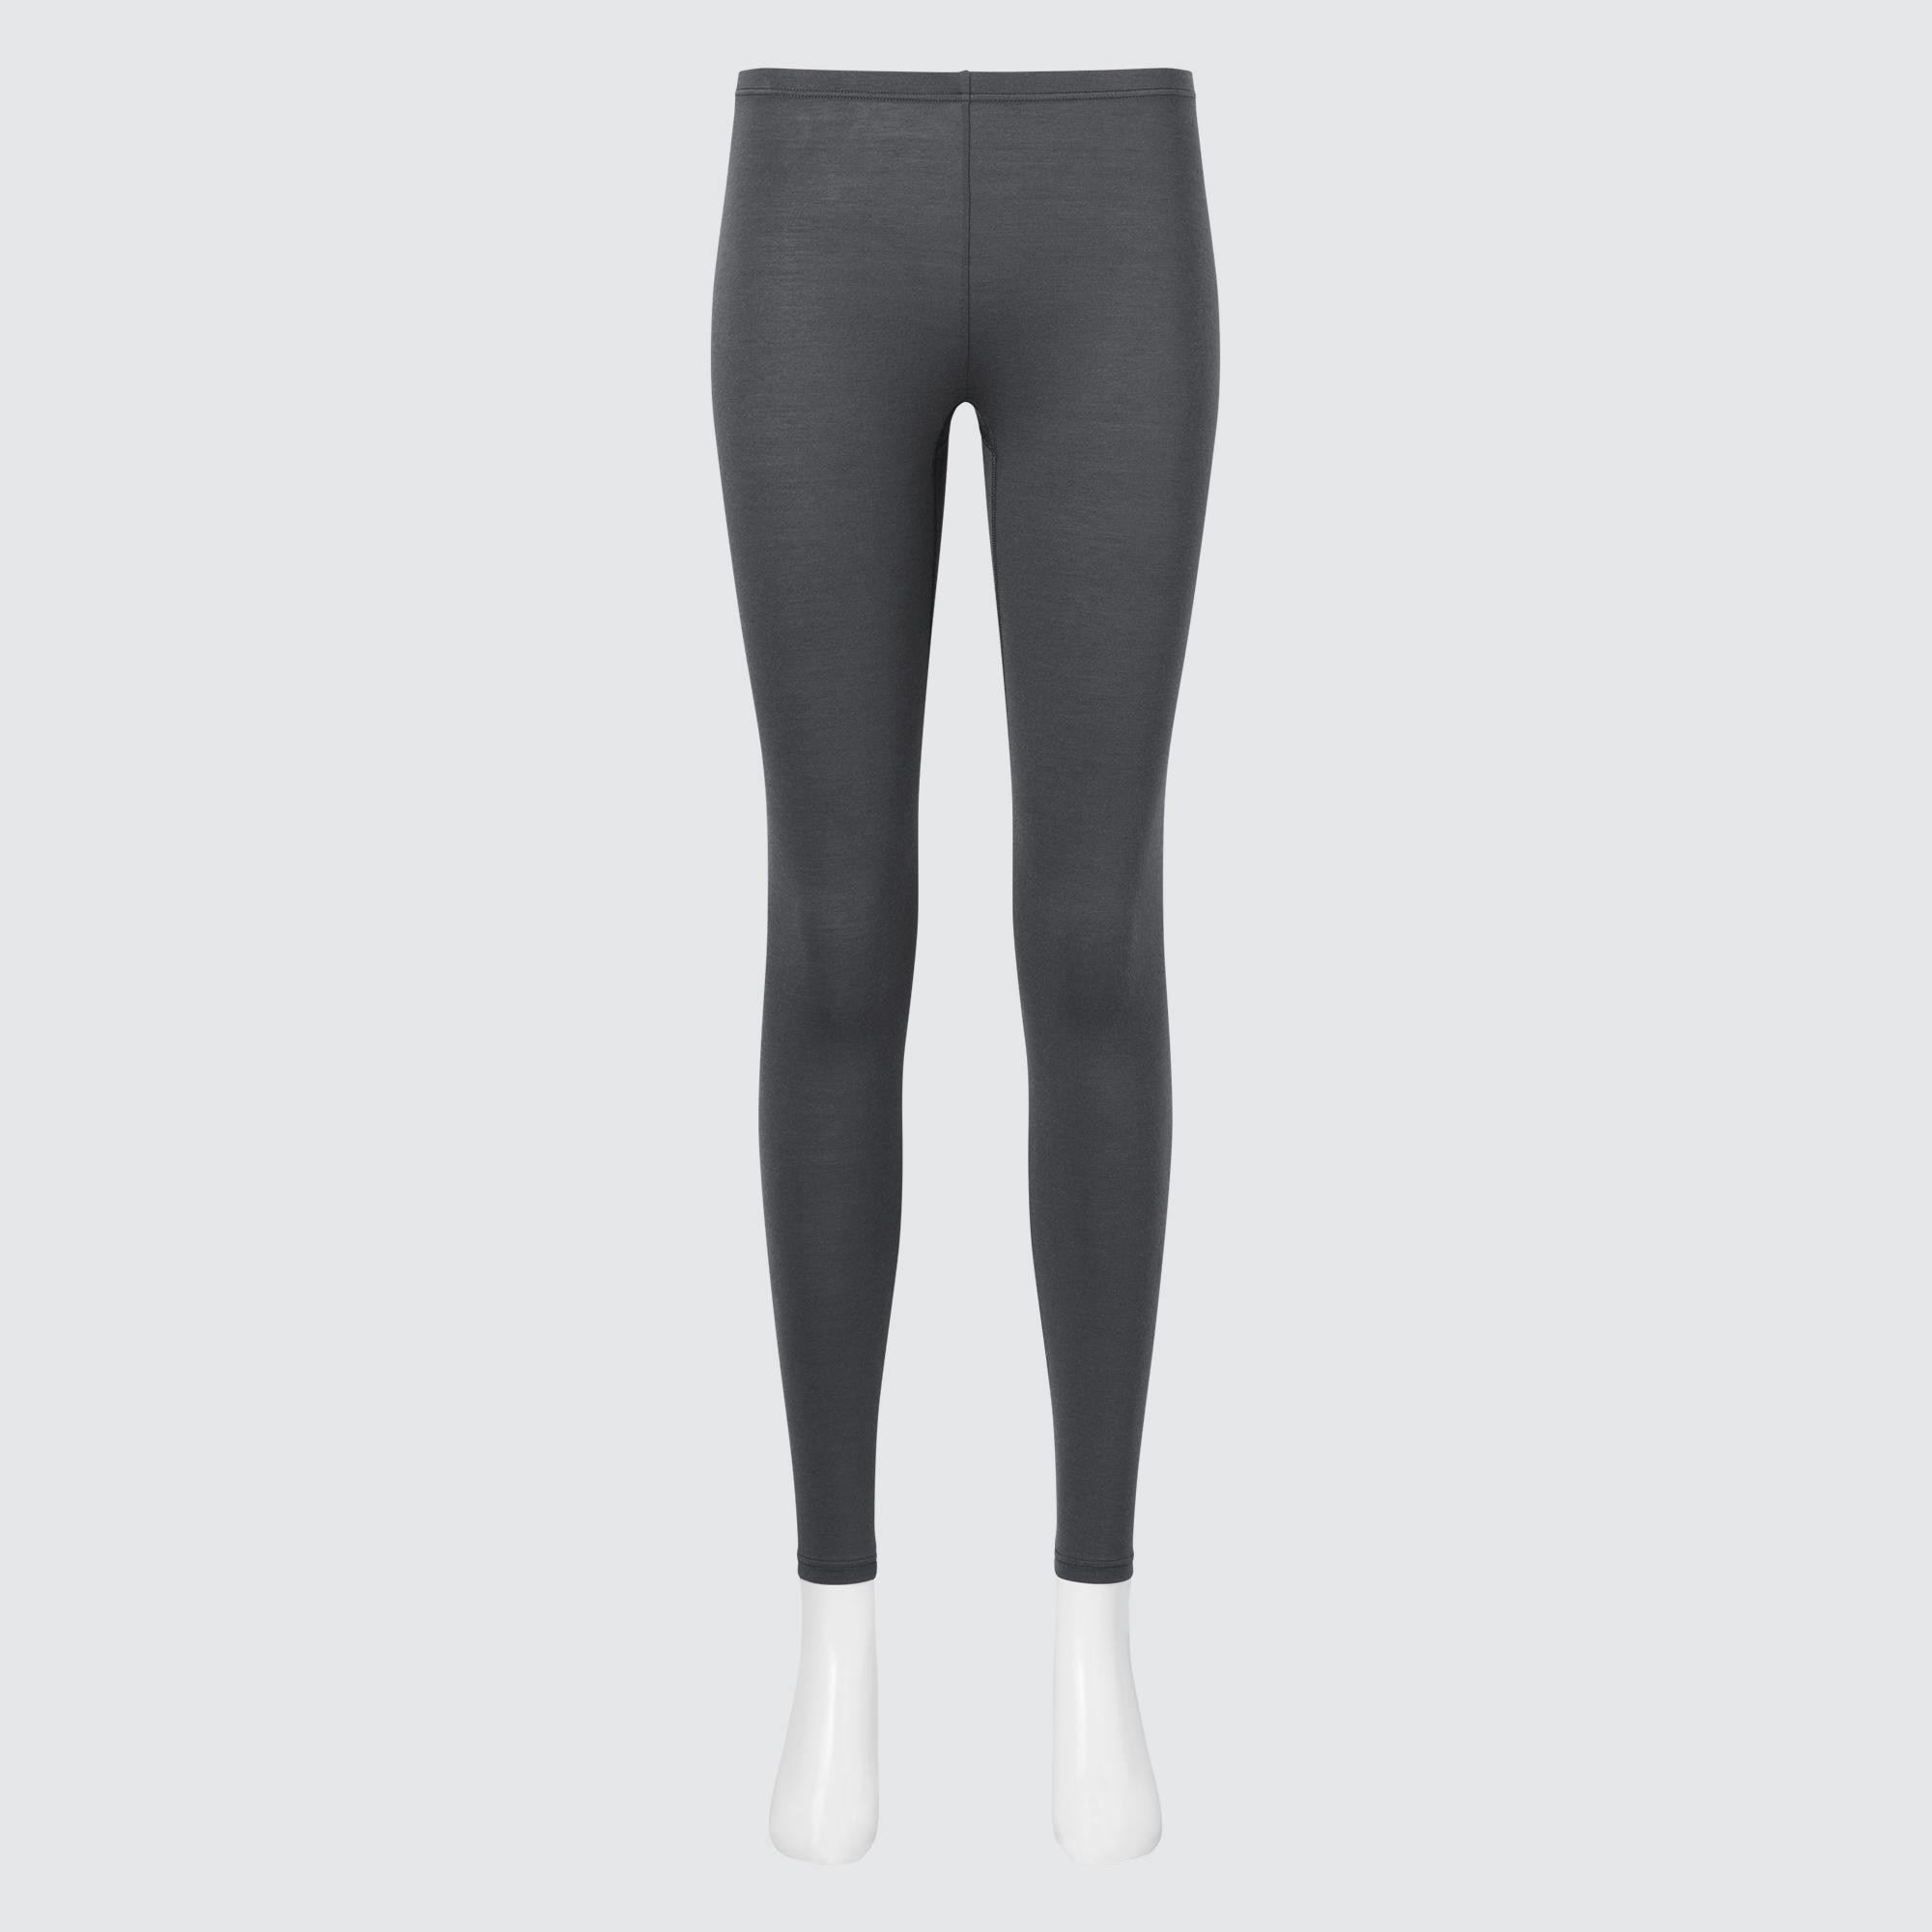 Heat tech grey leggings tights size S